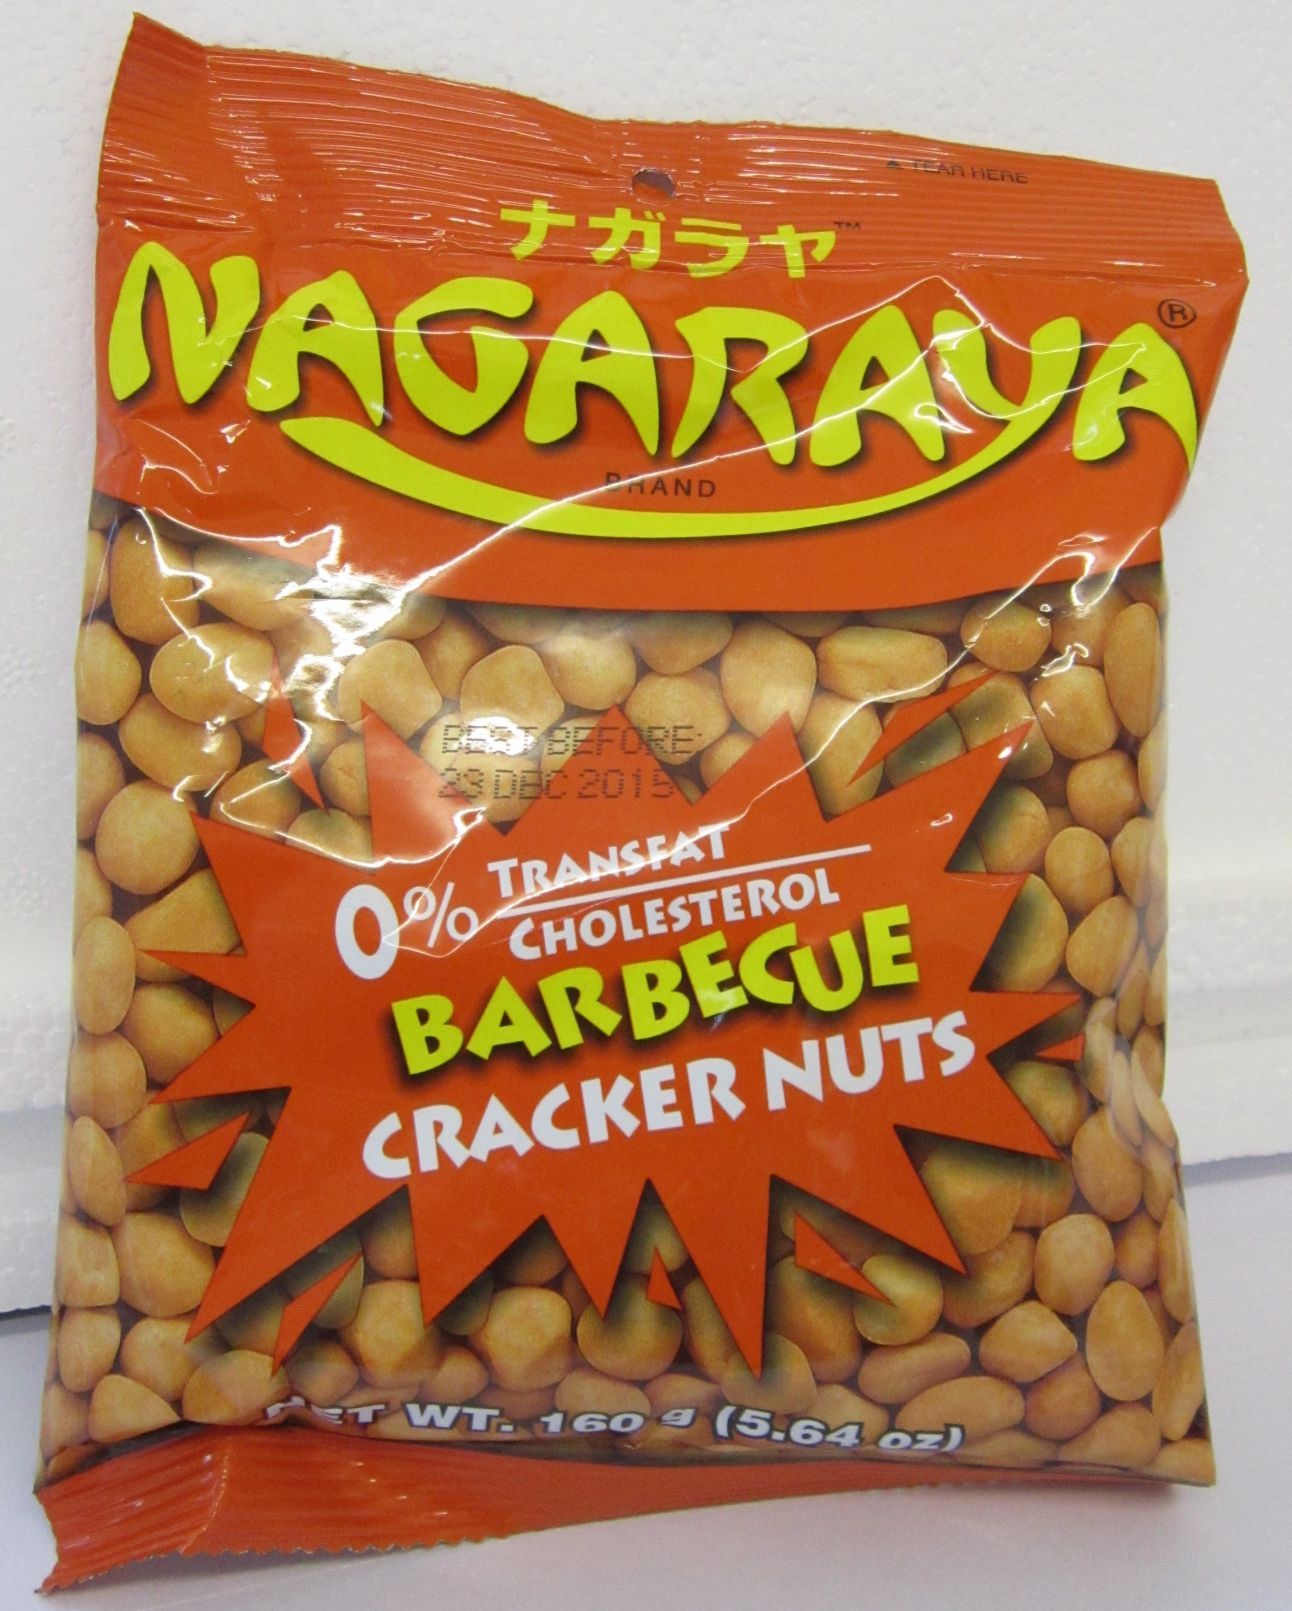 Nagaraya Barbeceu Cracker Nuts Image